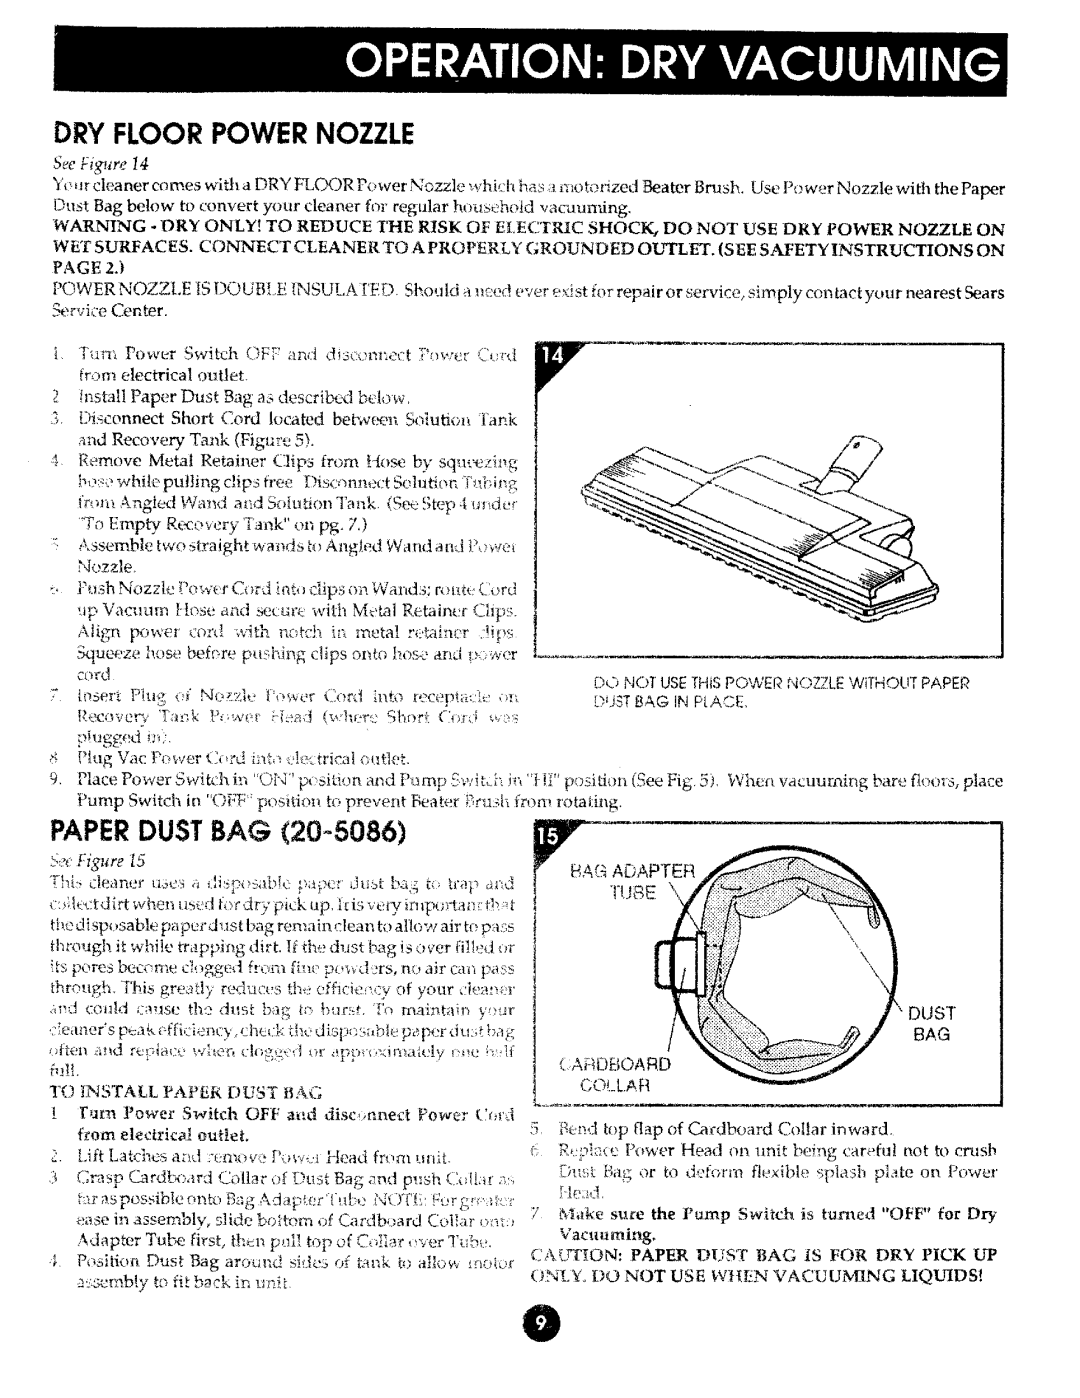 Kenmore 175.869039 manual Dry Floor Power Nozzle, Paper Dust Bag, See Finite, Figure t5, h,ql 